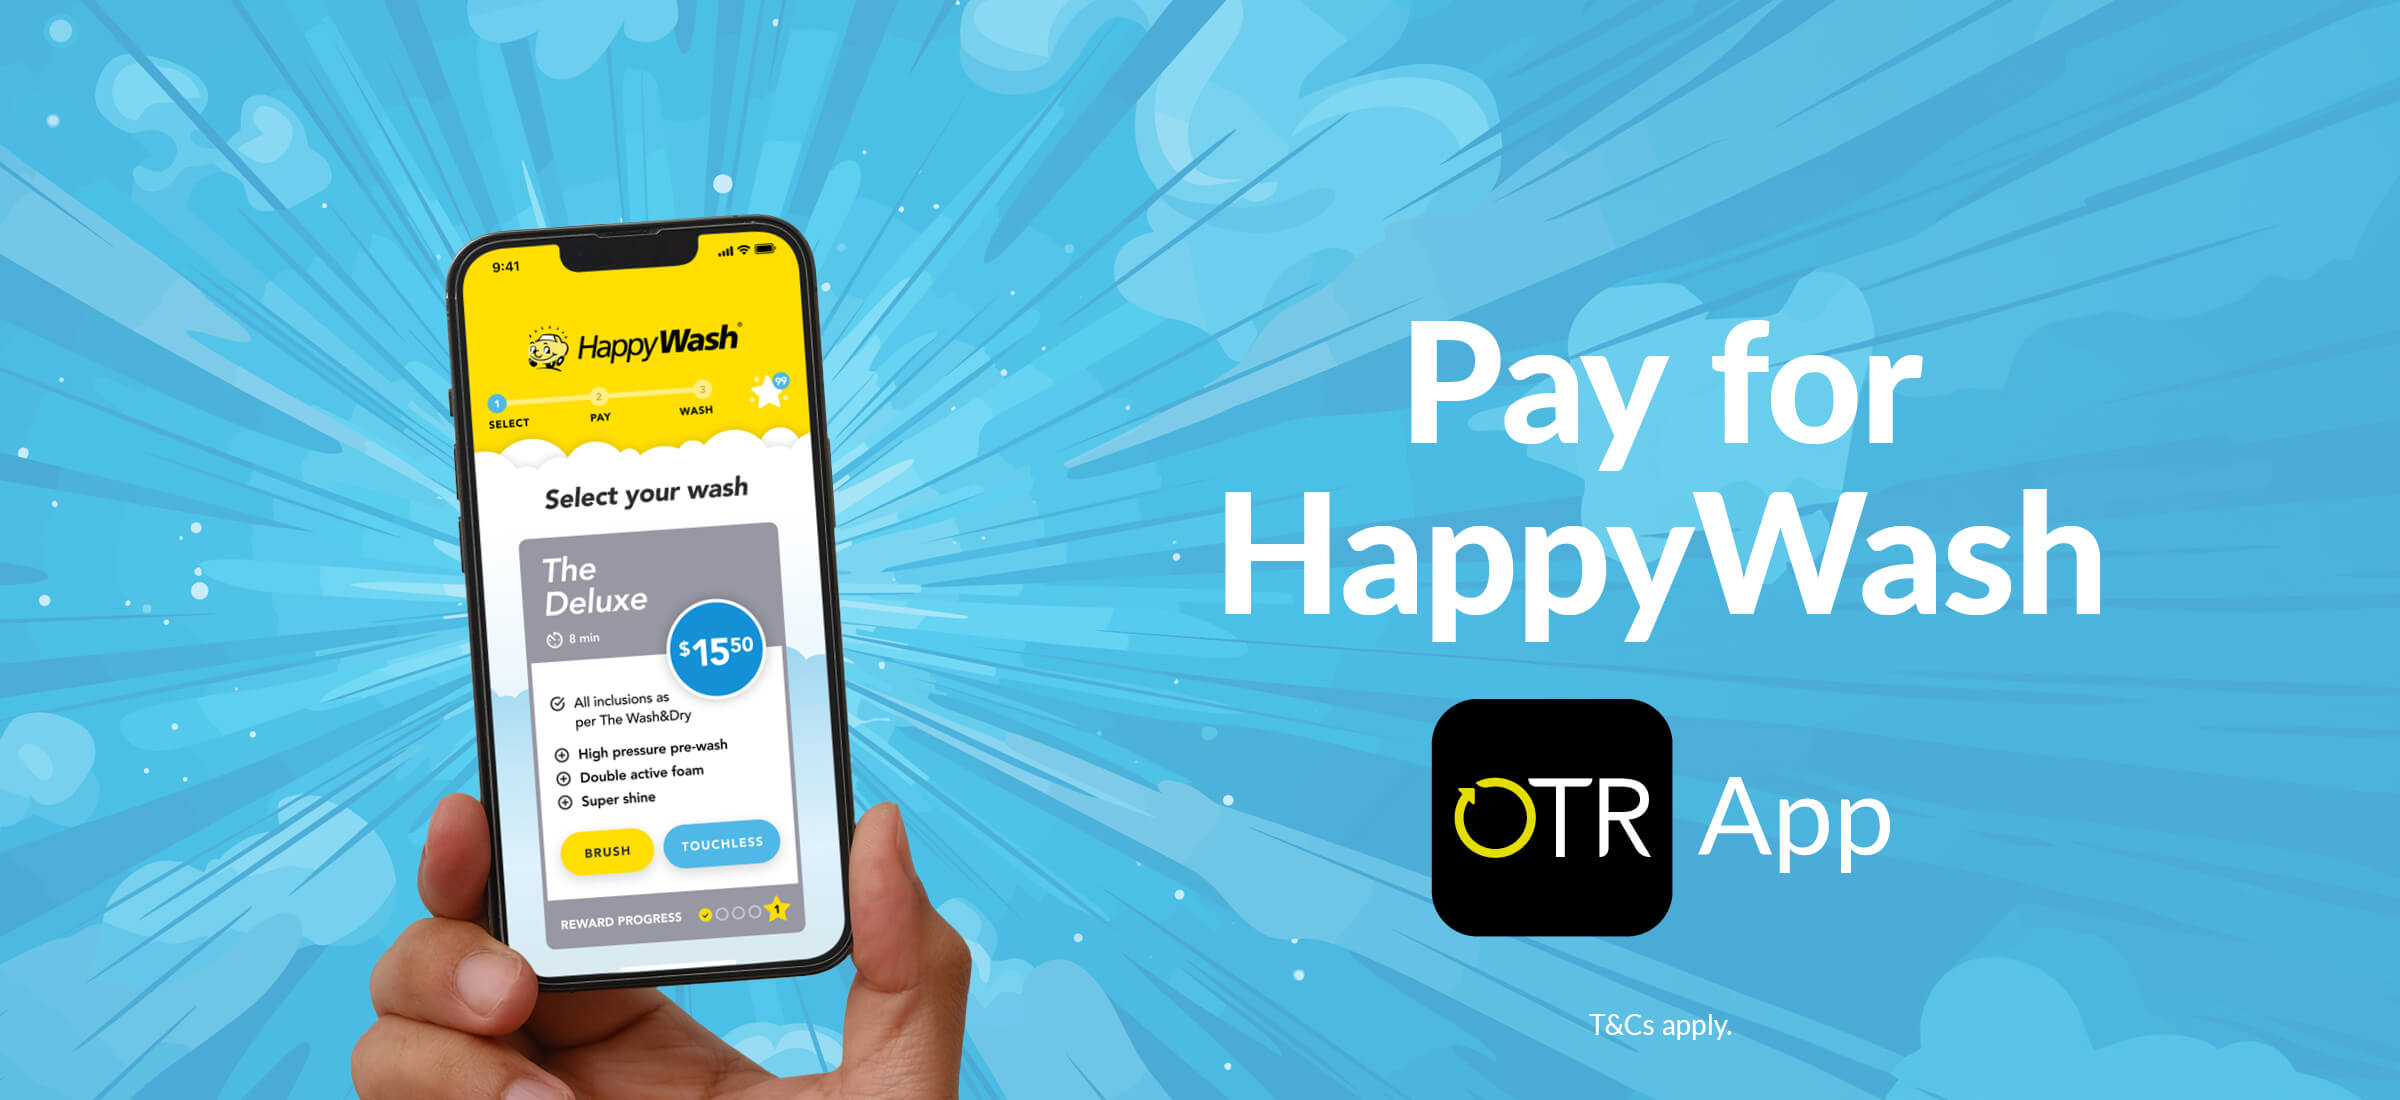 OTR App - Pay for HappyWash